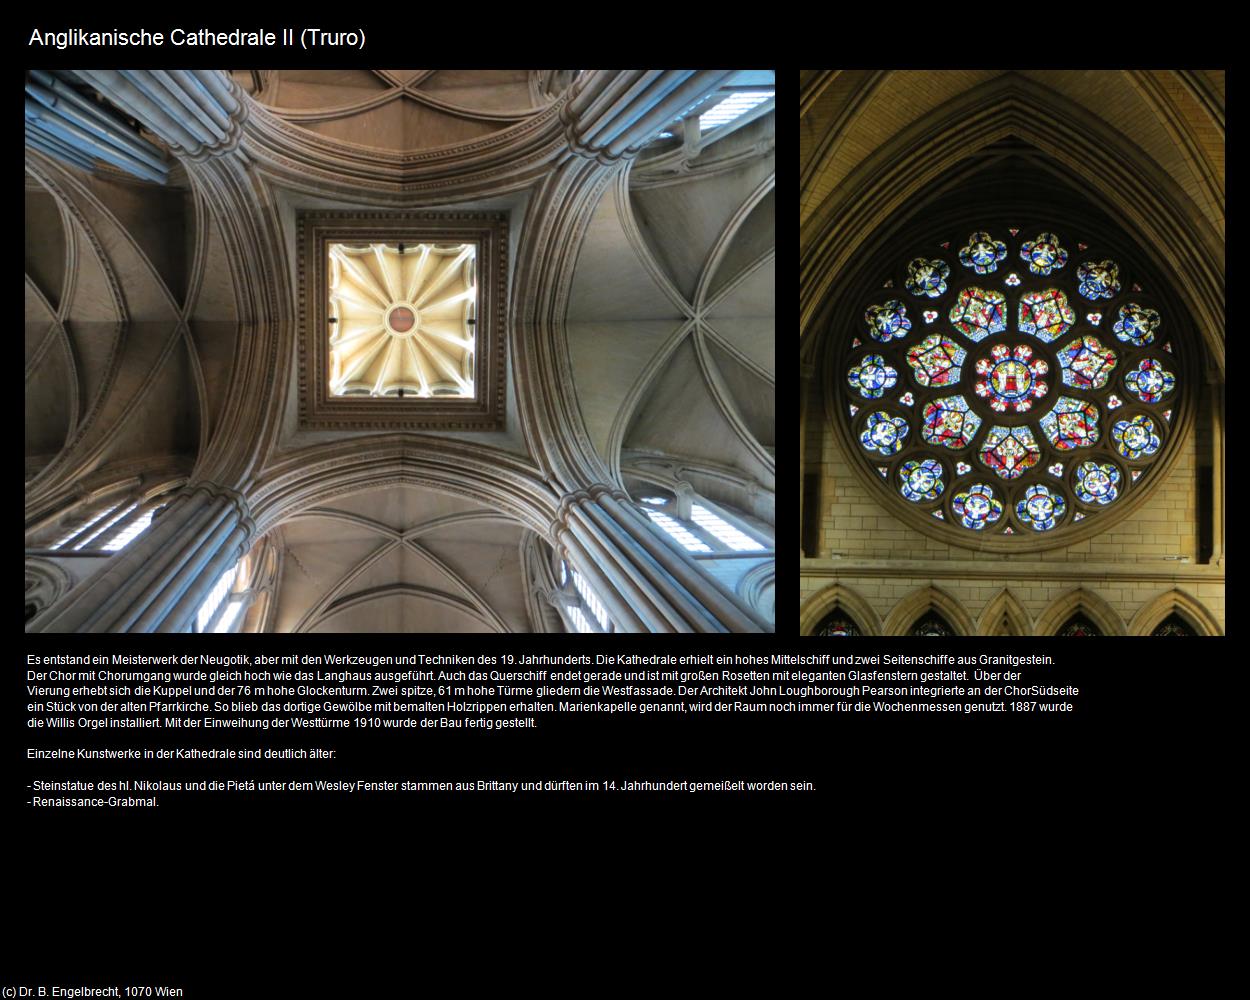 Anglikanische Cathedrale II (Truro, England) in Kulturatlas-ENGLAND und WALES